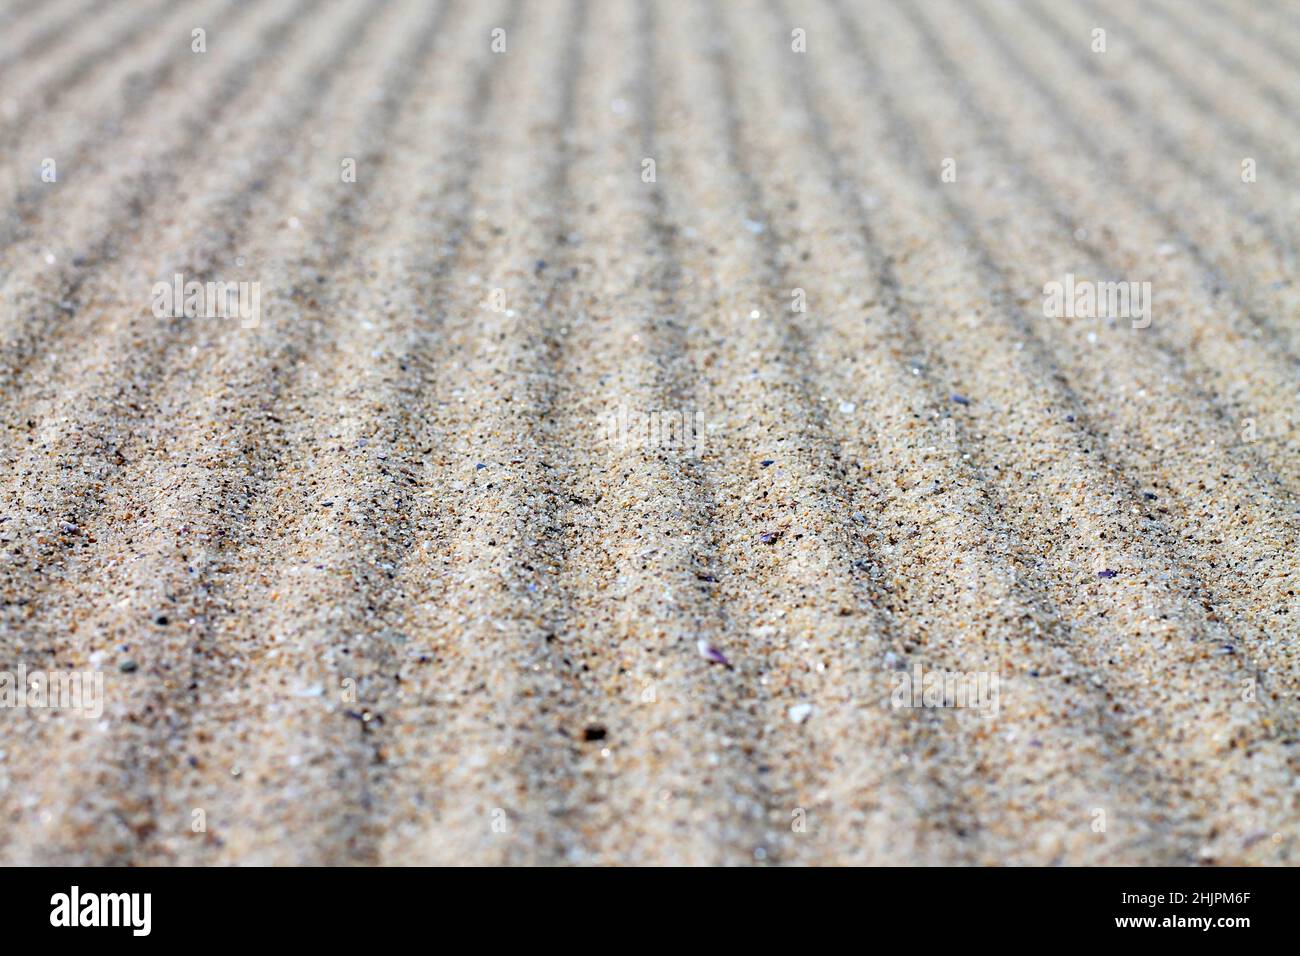 Textura de arena ondulada para el fondo. Foto de stock